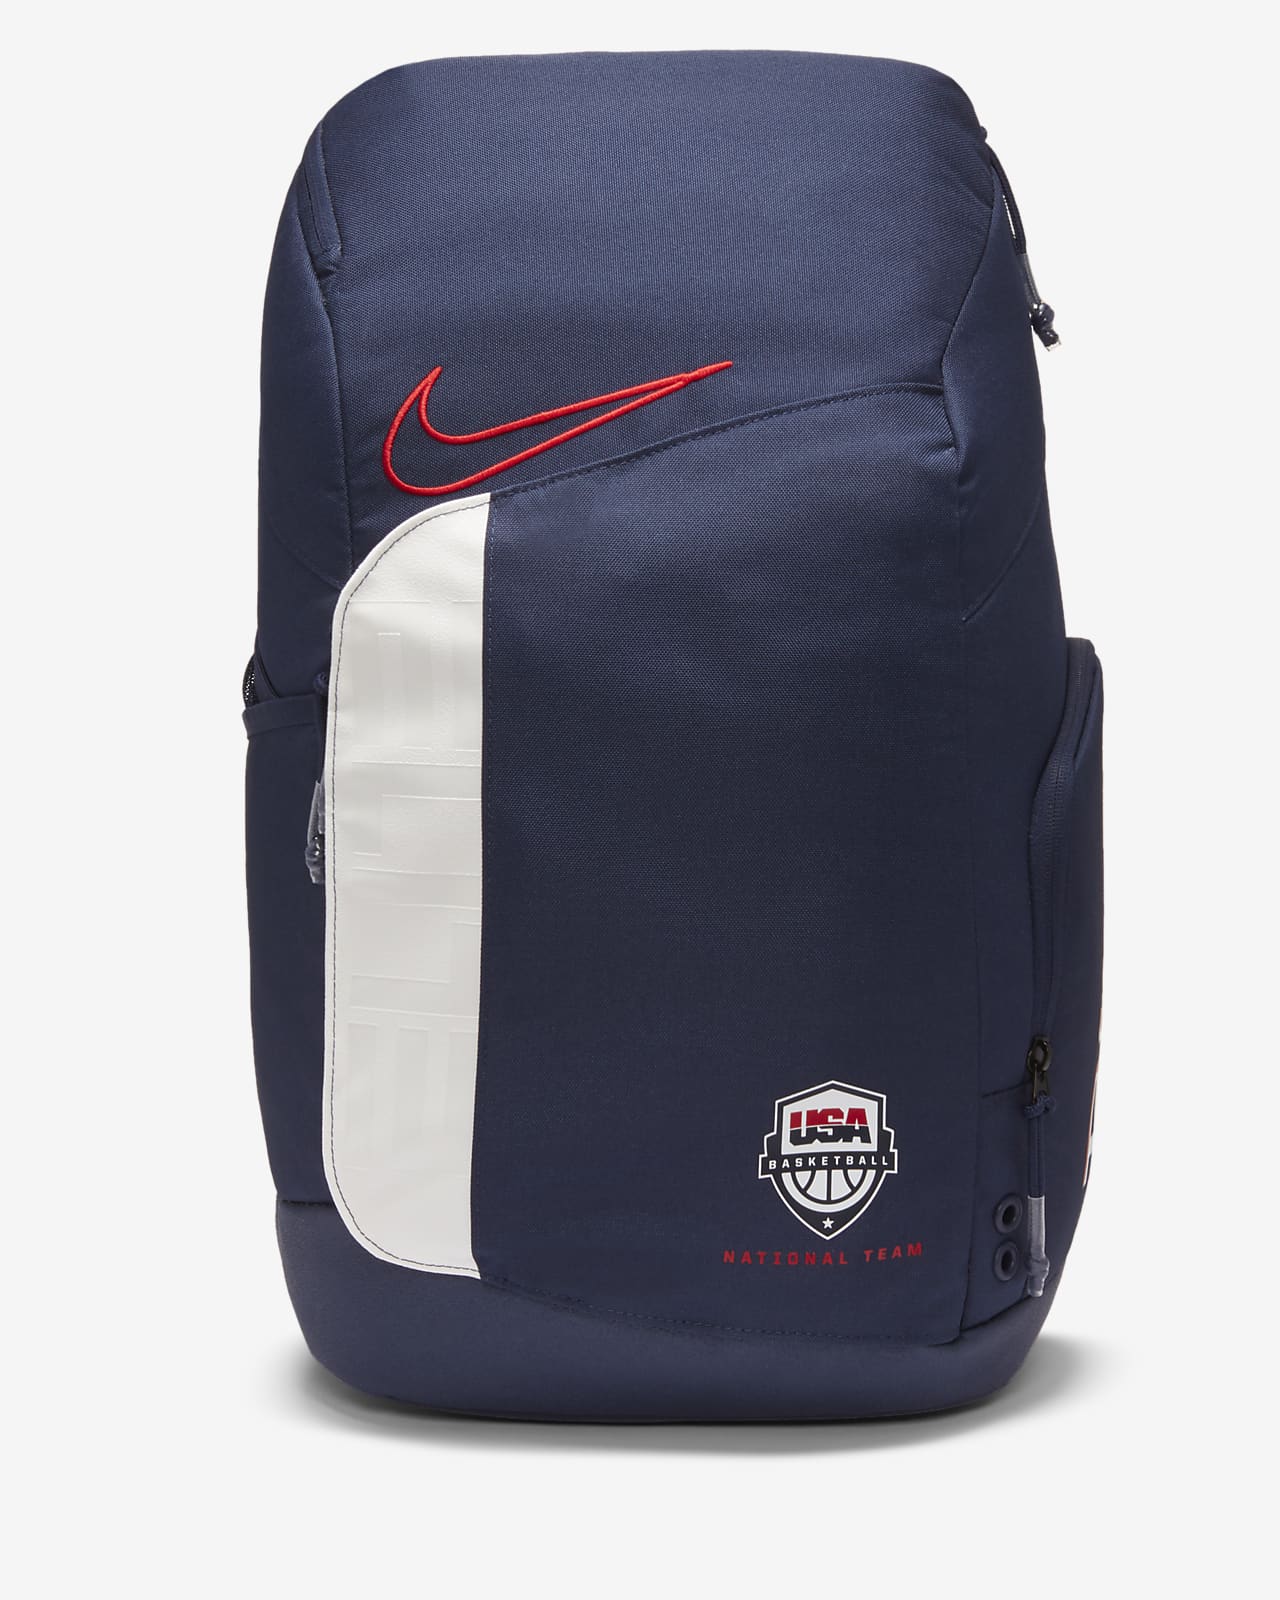 Nike Team USA Elite Pro Basketball Backpack.